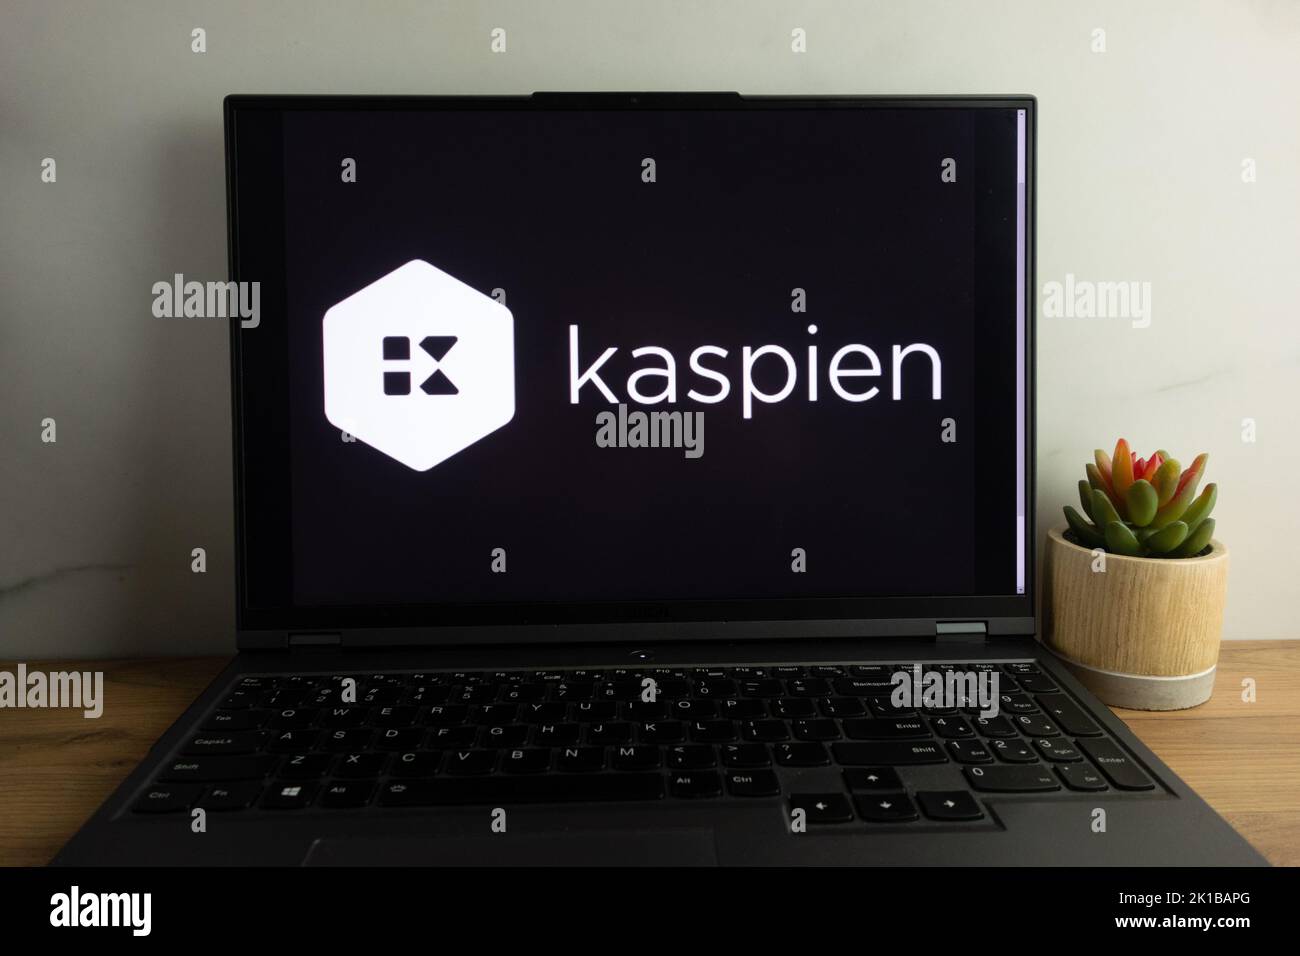 KONSKIE, POLAND - September 12, 2022: Kaspien company logo displayed on laptop computer screen Stock Photo